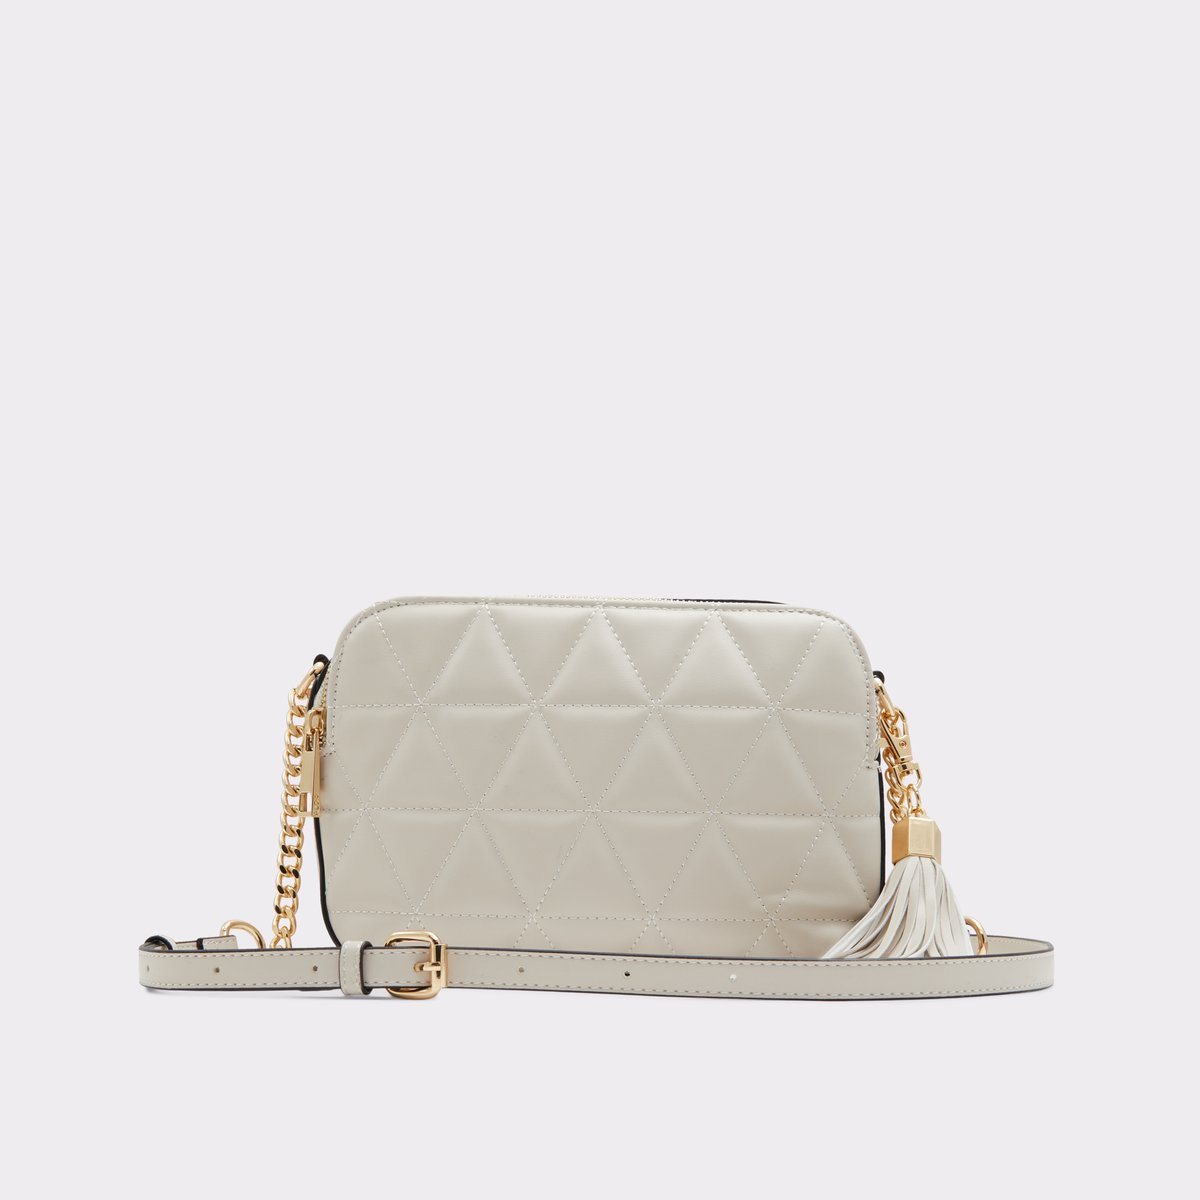 Aldo - Authenticated Handbag - Synthetic White for Women, Never Worn